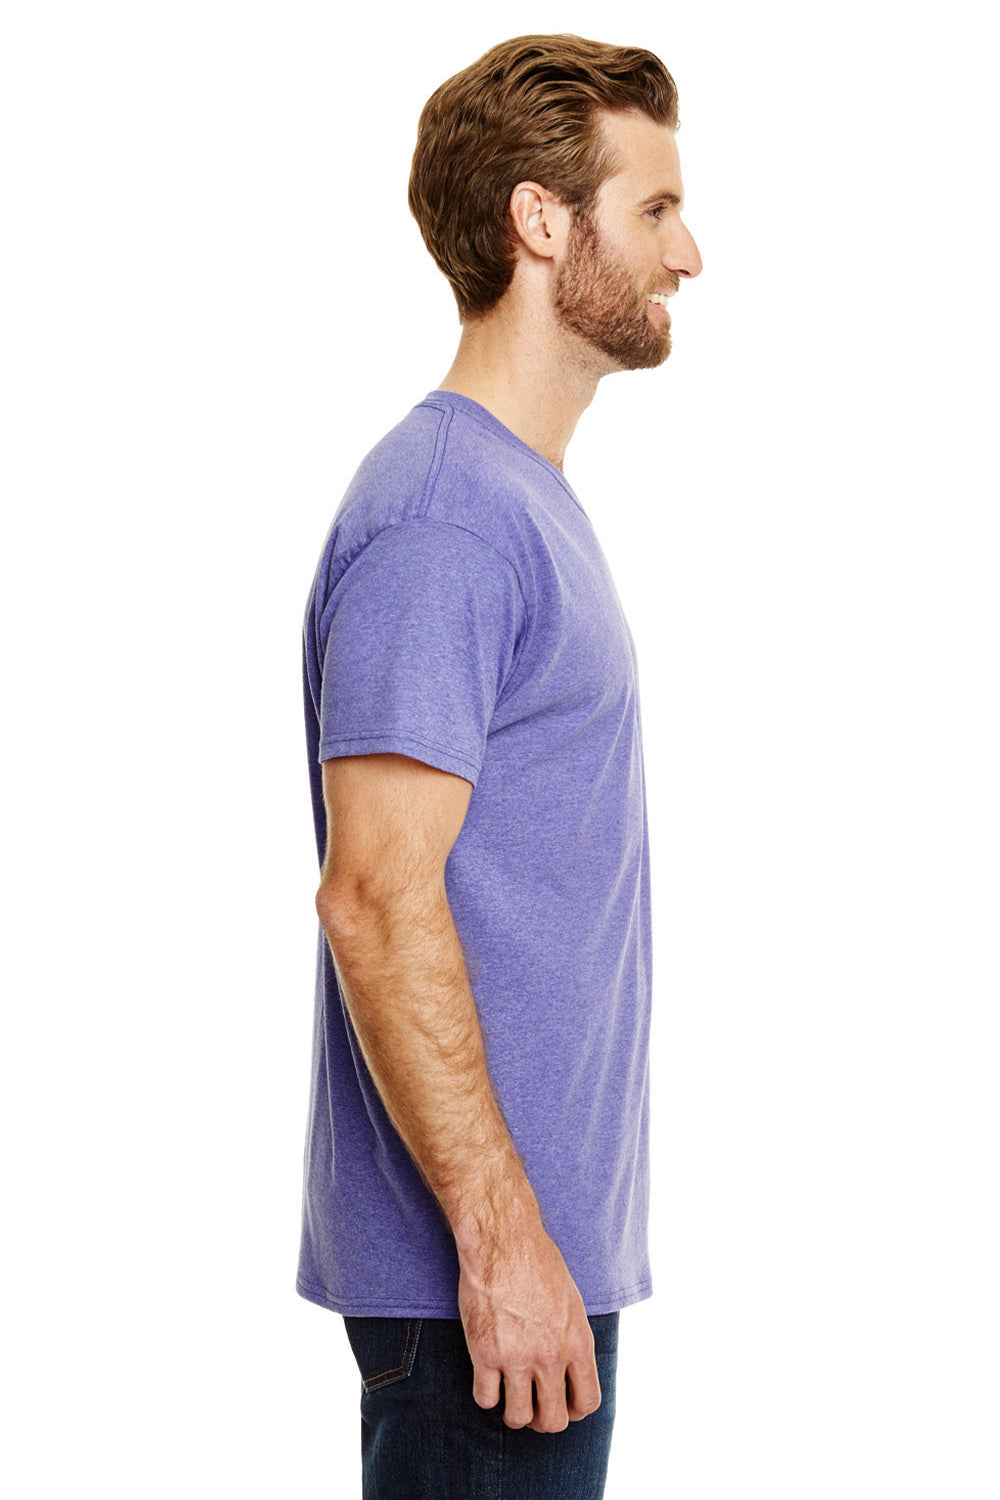 Hanes 42TB Mens X-Temp FreshIQ Moisture Wicking Short Sleeve Crewneck T-Shirt Grape Purple Side